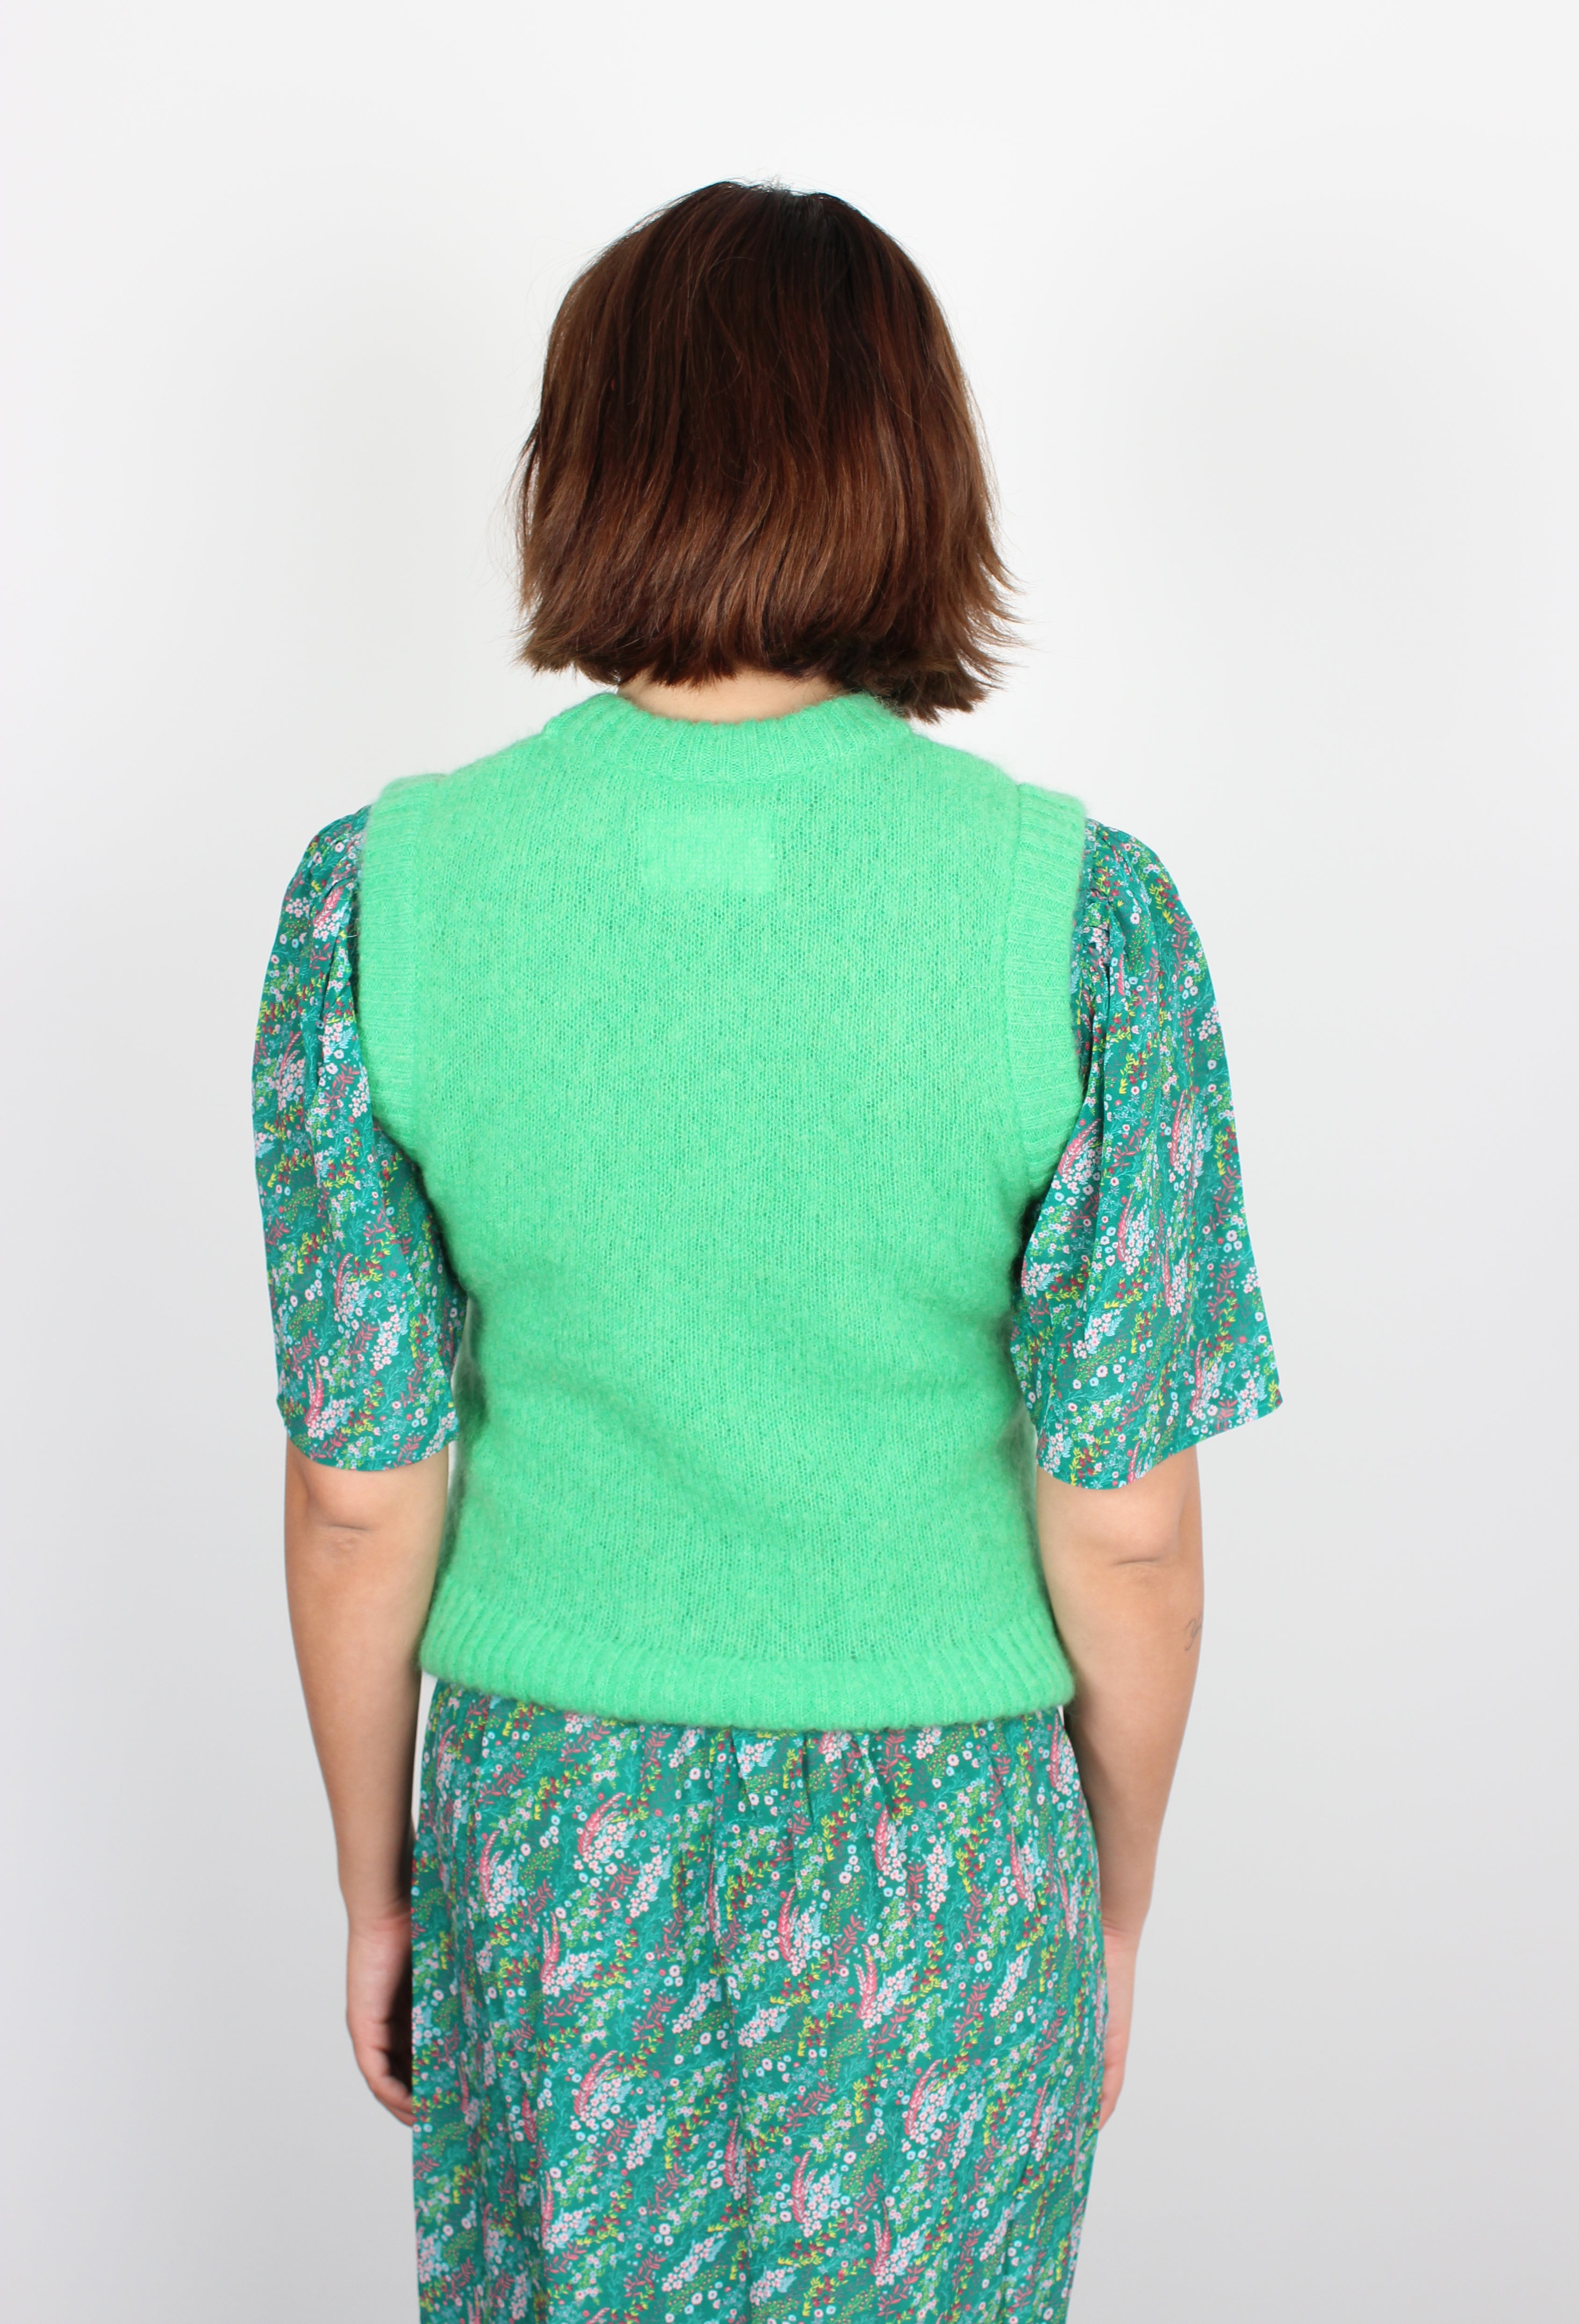 Leon & Harper Mochi sleeveless green knit